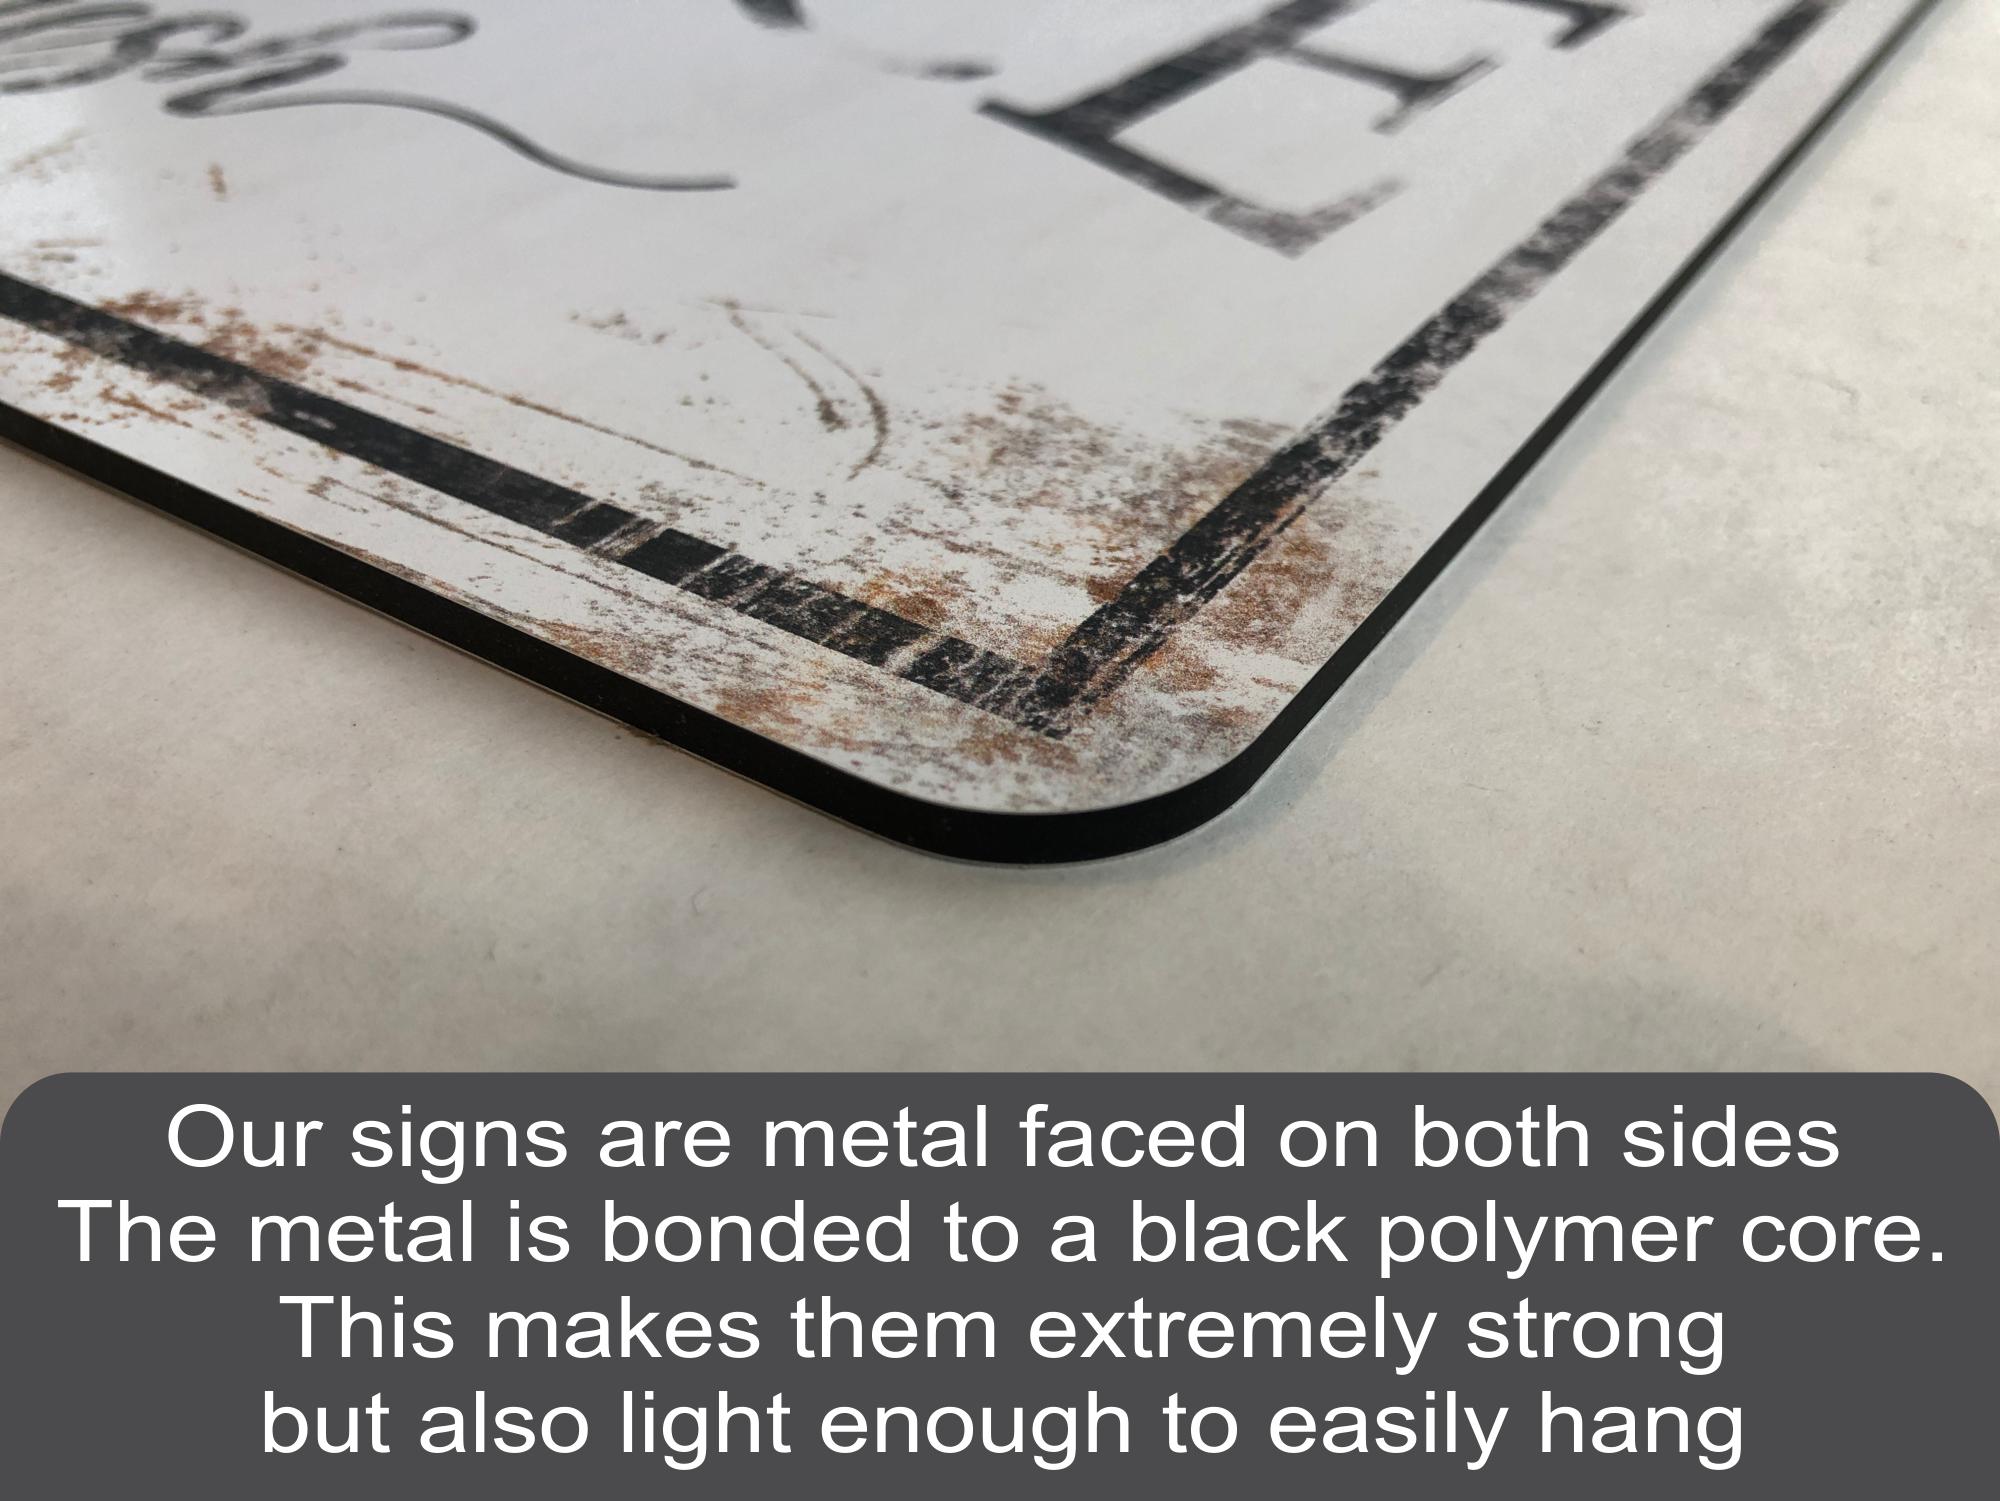 She Shed: Semi Custom Rectangular Metal Sign